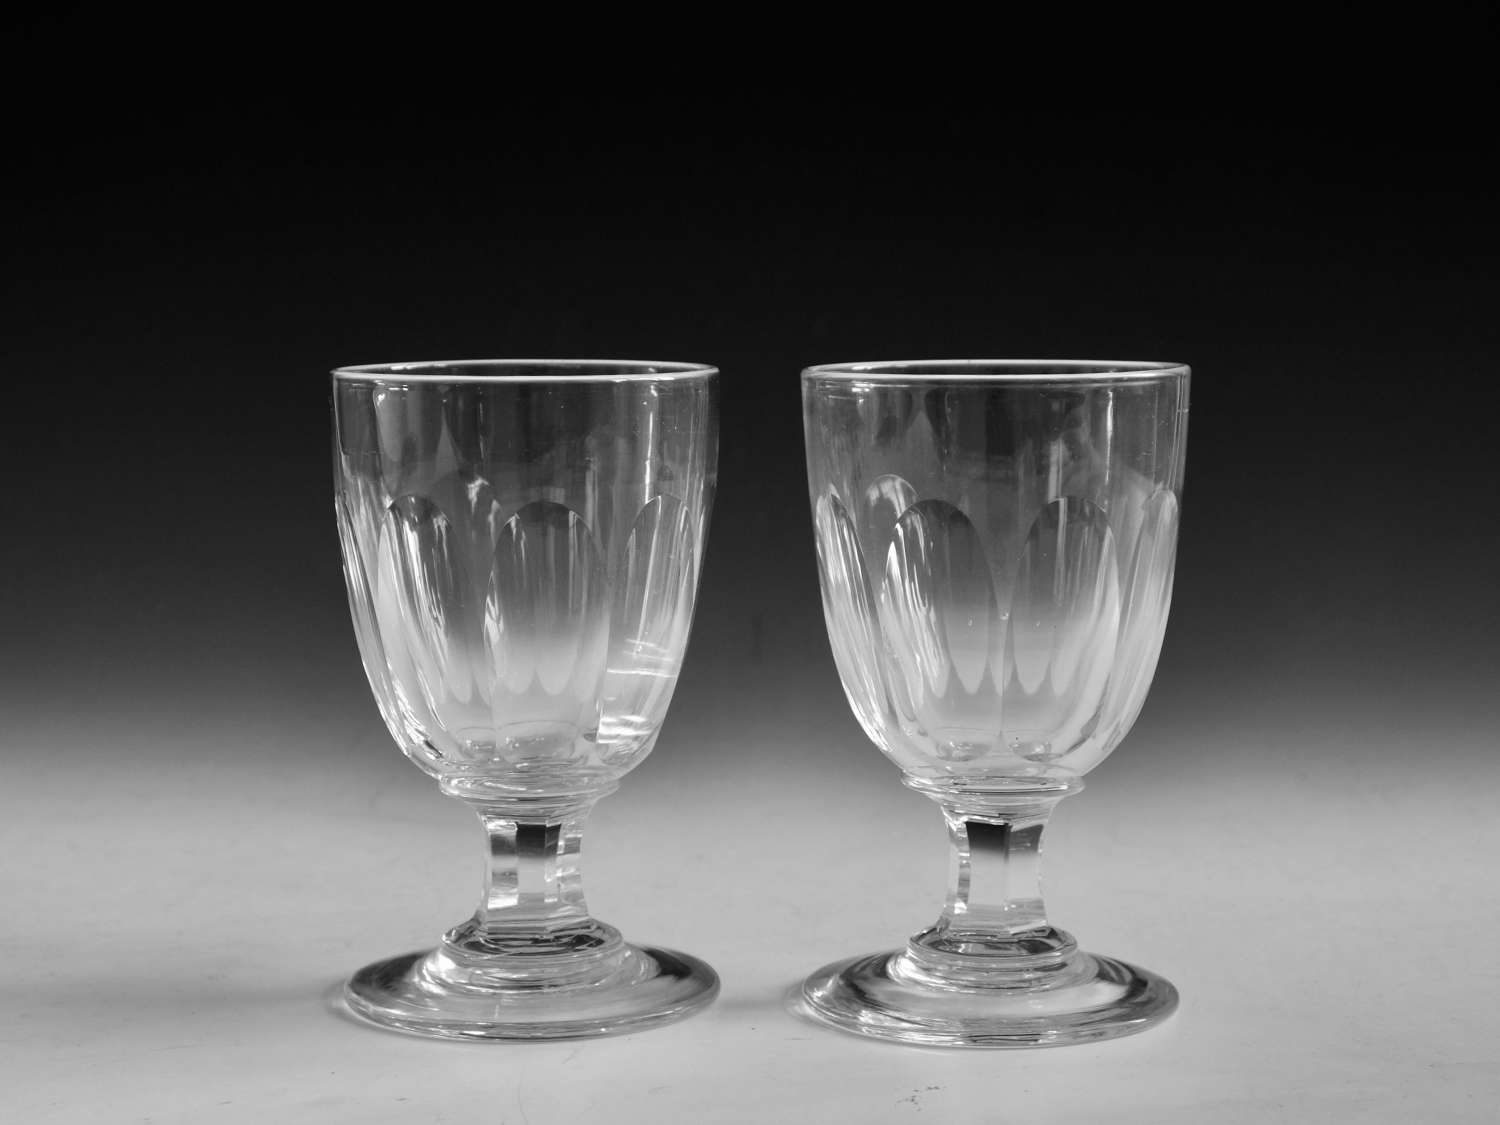 Antique glass rummers pair c1860